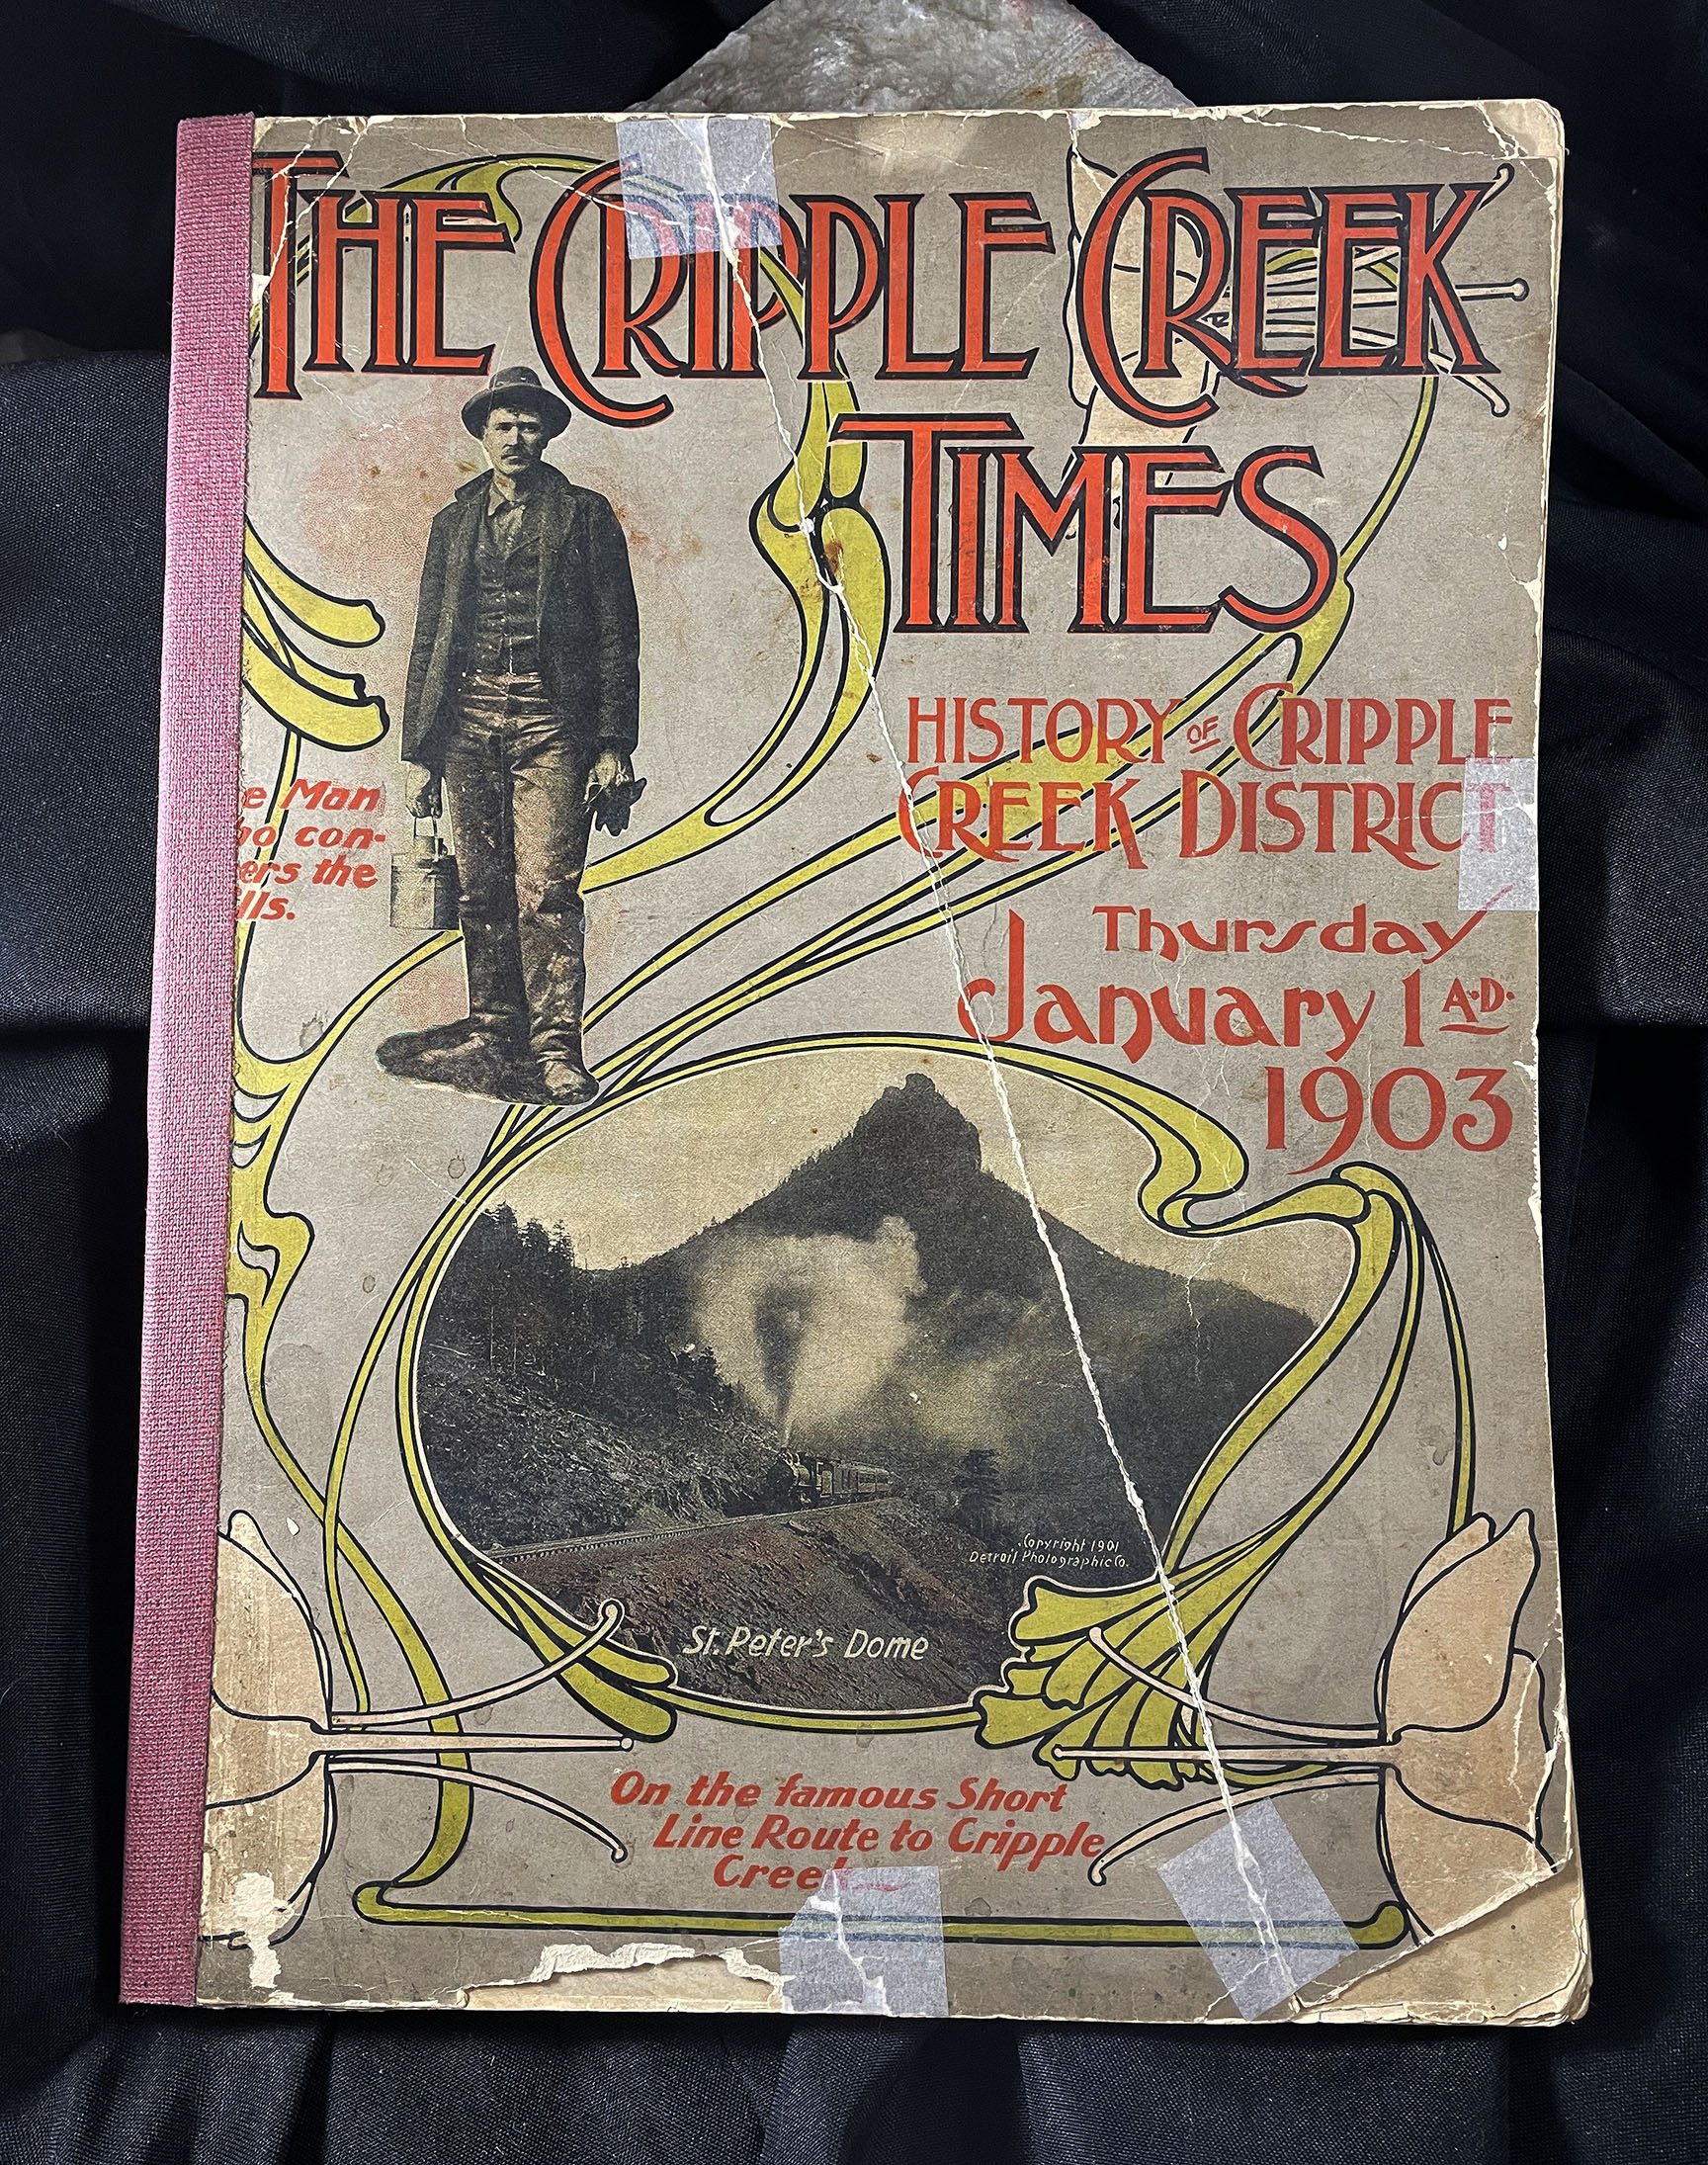 CRIPPLE CREEK TIMES History of Cripple Creek Gold Mining District Colorado book 1903